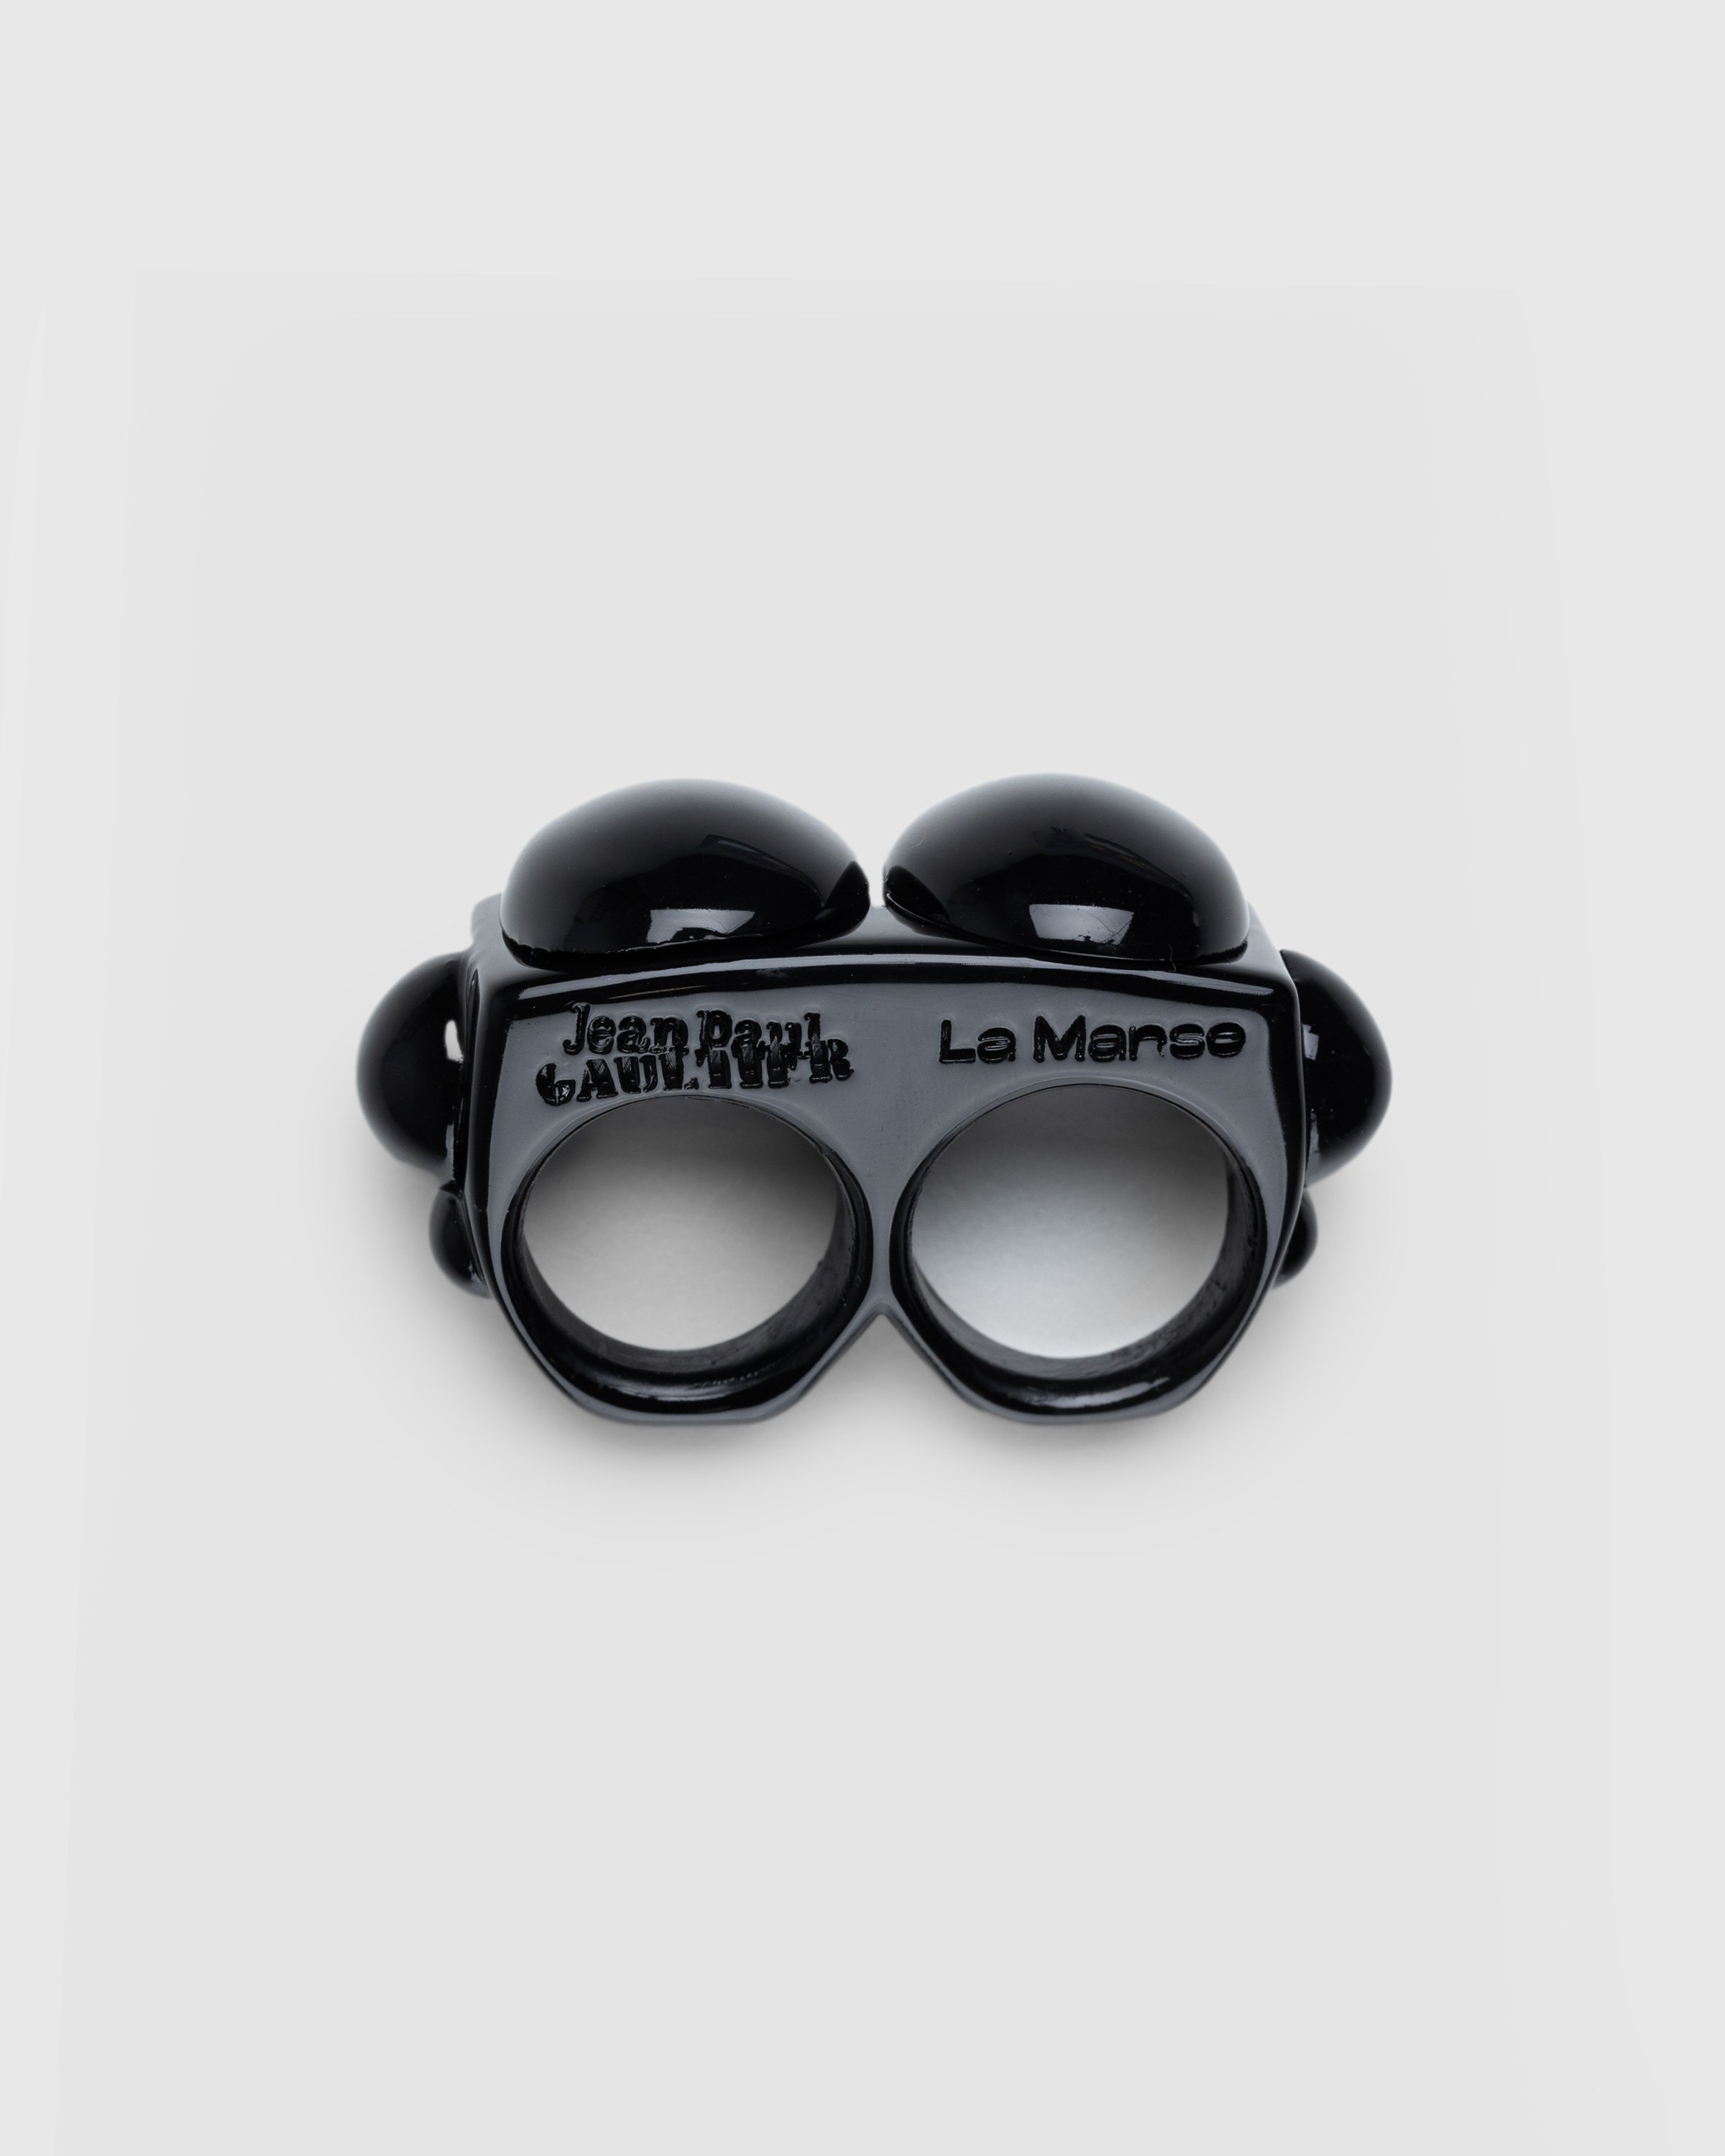 Jean Paul Gaultier – Siames Ring Black - Jewelry - Black - Image 3